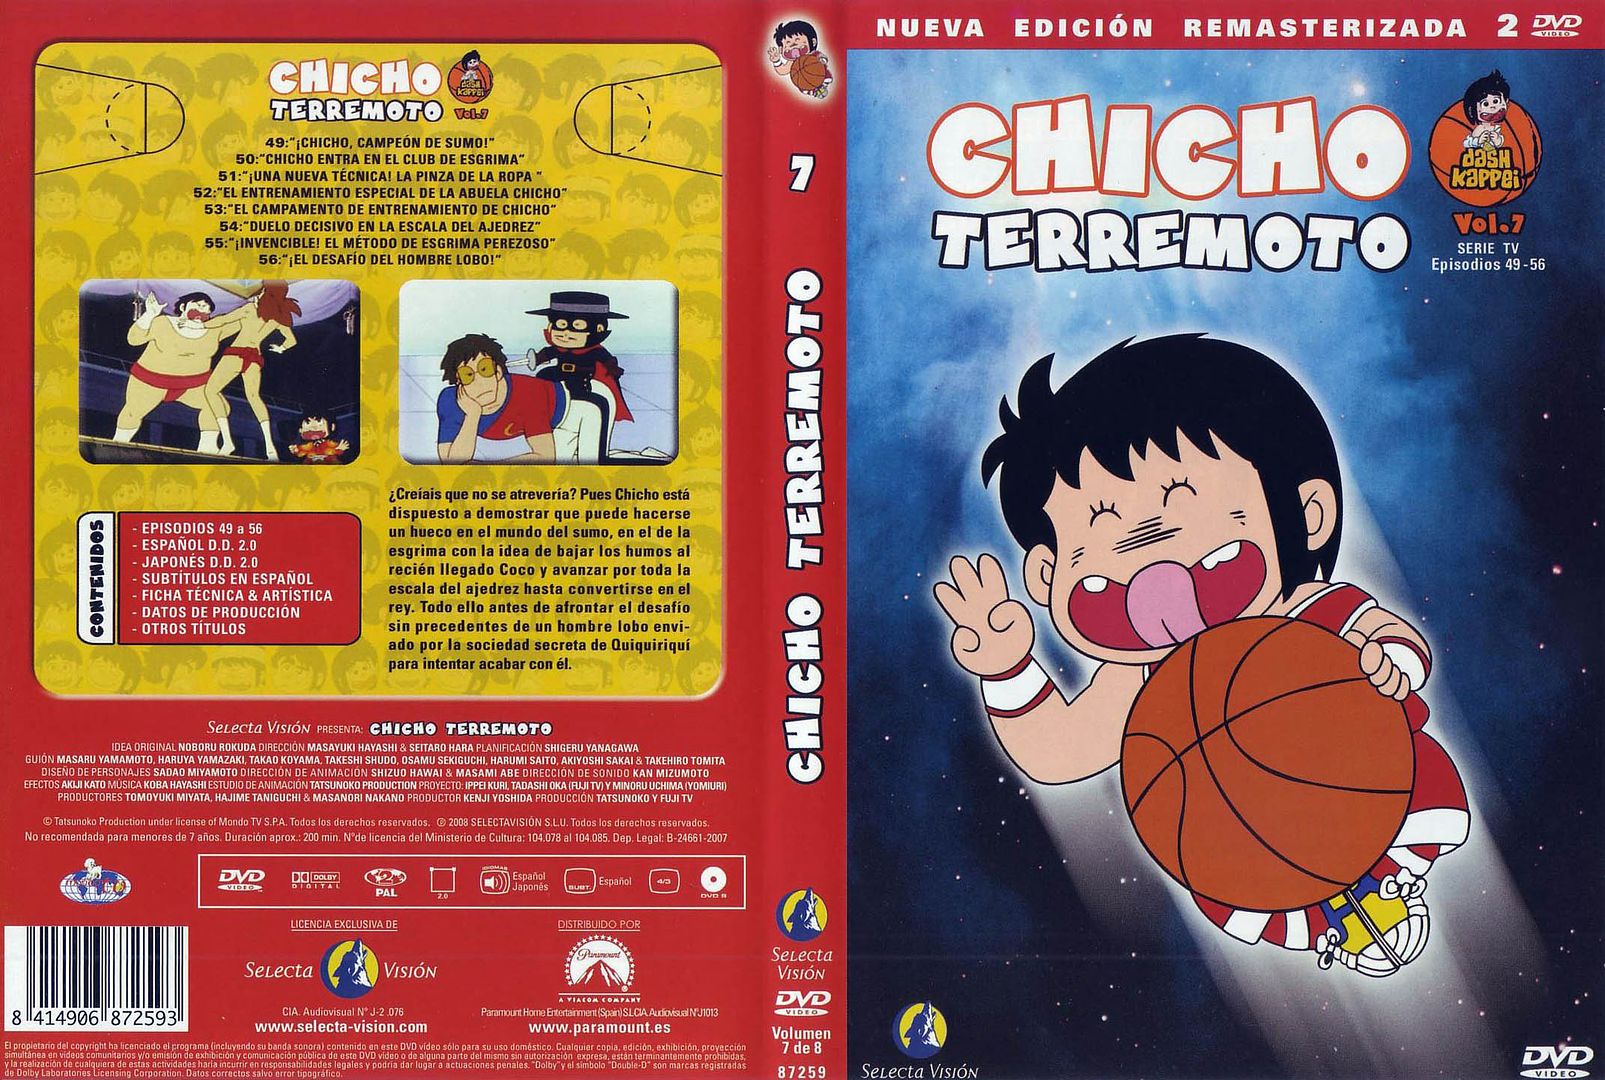 Chicho Terremoto Volumen 7 Edicion Remasterizada Caratula - Chicho Terremoto Serie Completa (65 Episodios)